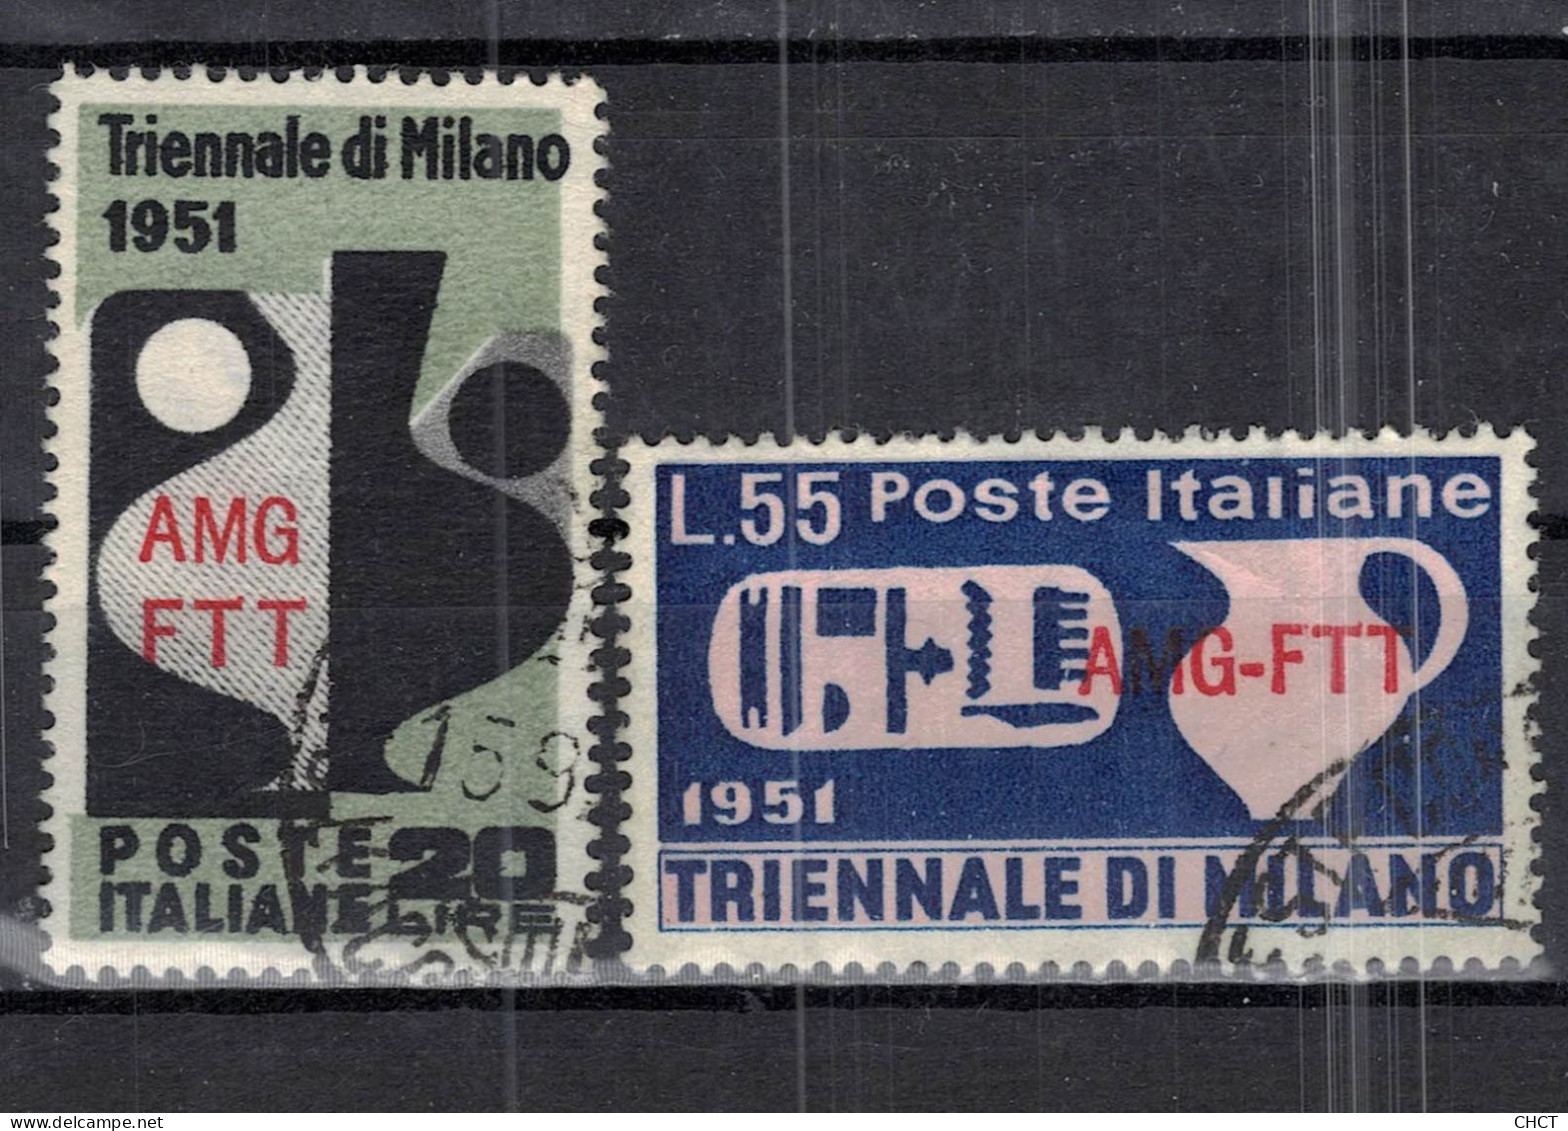 CHCT74 - Milan Triannual, Triennale Di Milano, AMG-FTT Overprint, Trieste A, 1951, Complete Series, Italy - Gebraucht